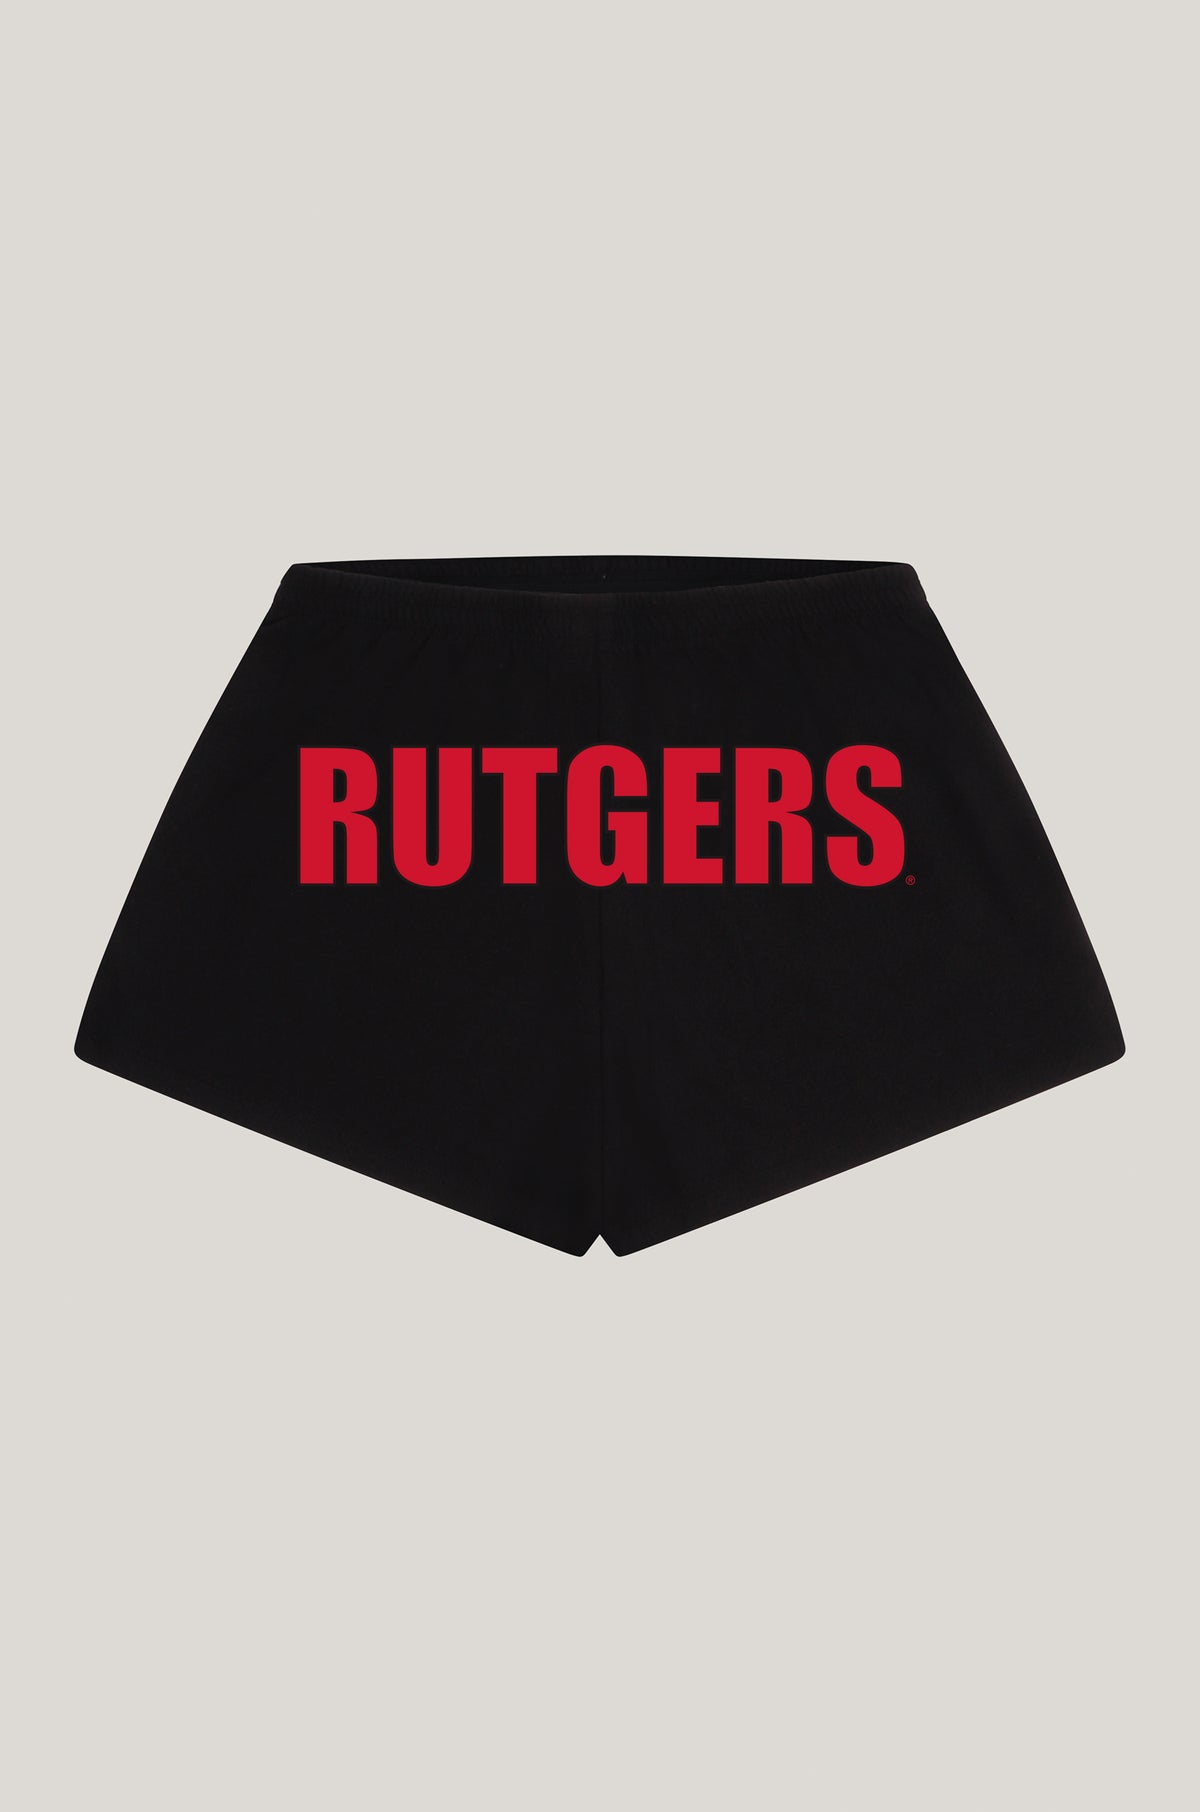 Rutgers P.E. Shorts